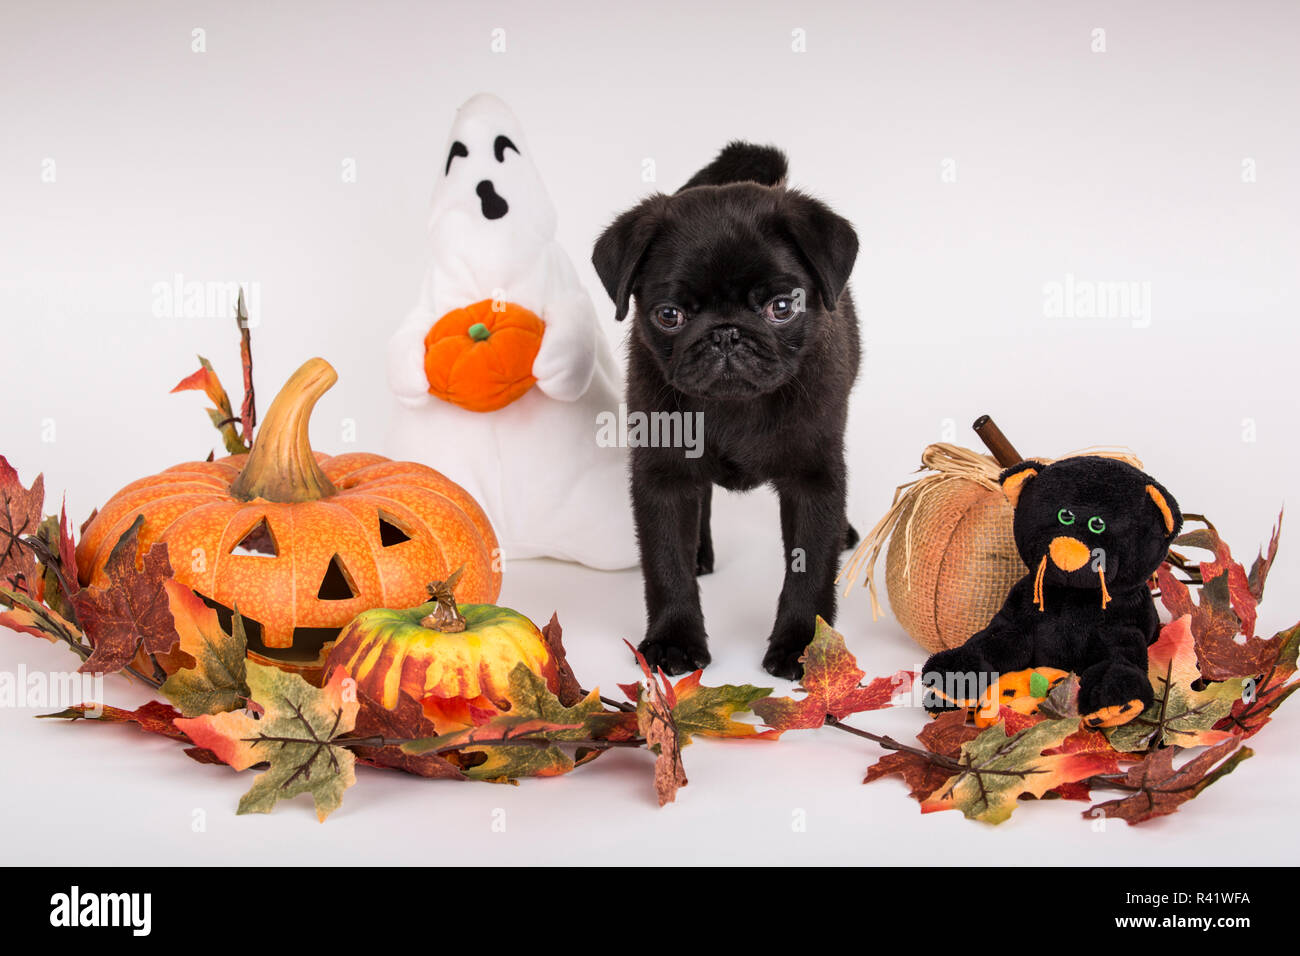 https://c8.alamy.com/comp/R41WFA/10-week-old-black-pug-puppy-surrounded-by-halloween-decorations-pr-R41WFA.jpg